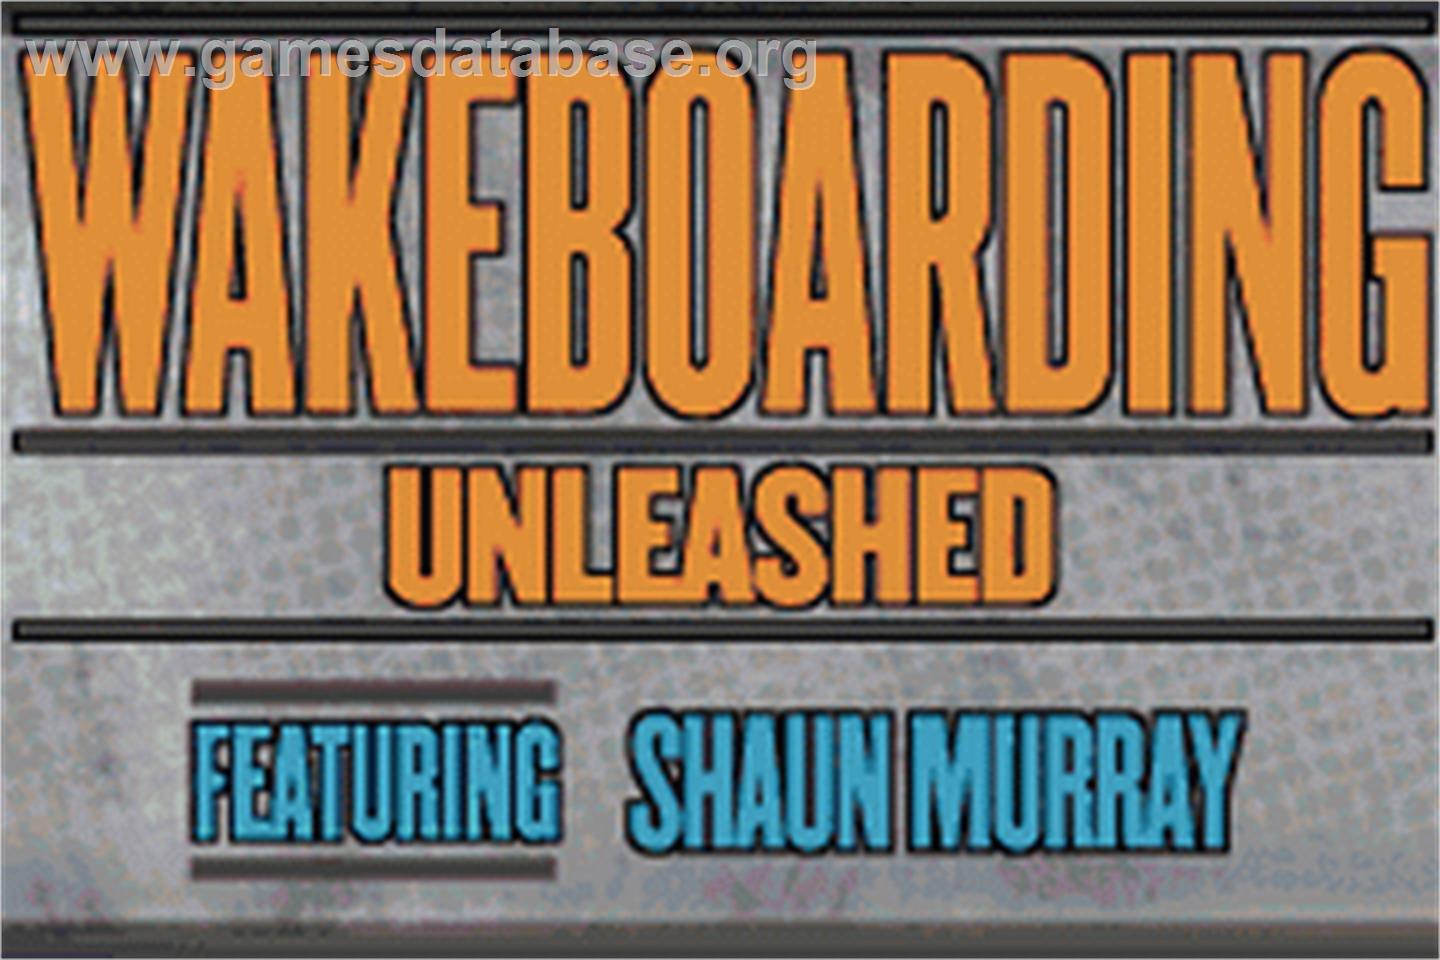 Wakeboarding Unleashed featuring Shaun Murray - Nintendo Game Boy Advance - Artwork - Title Screen